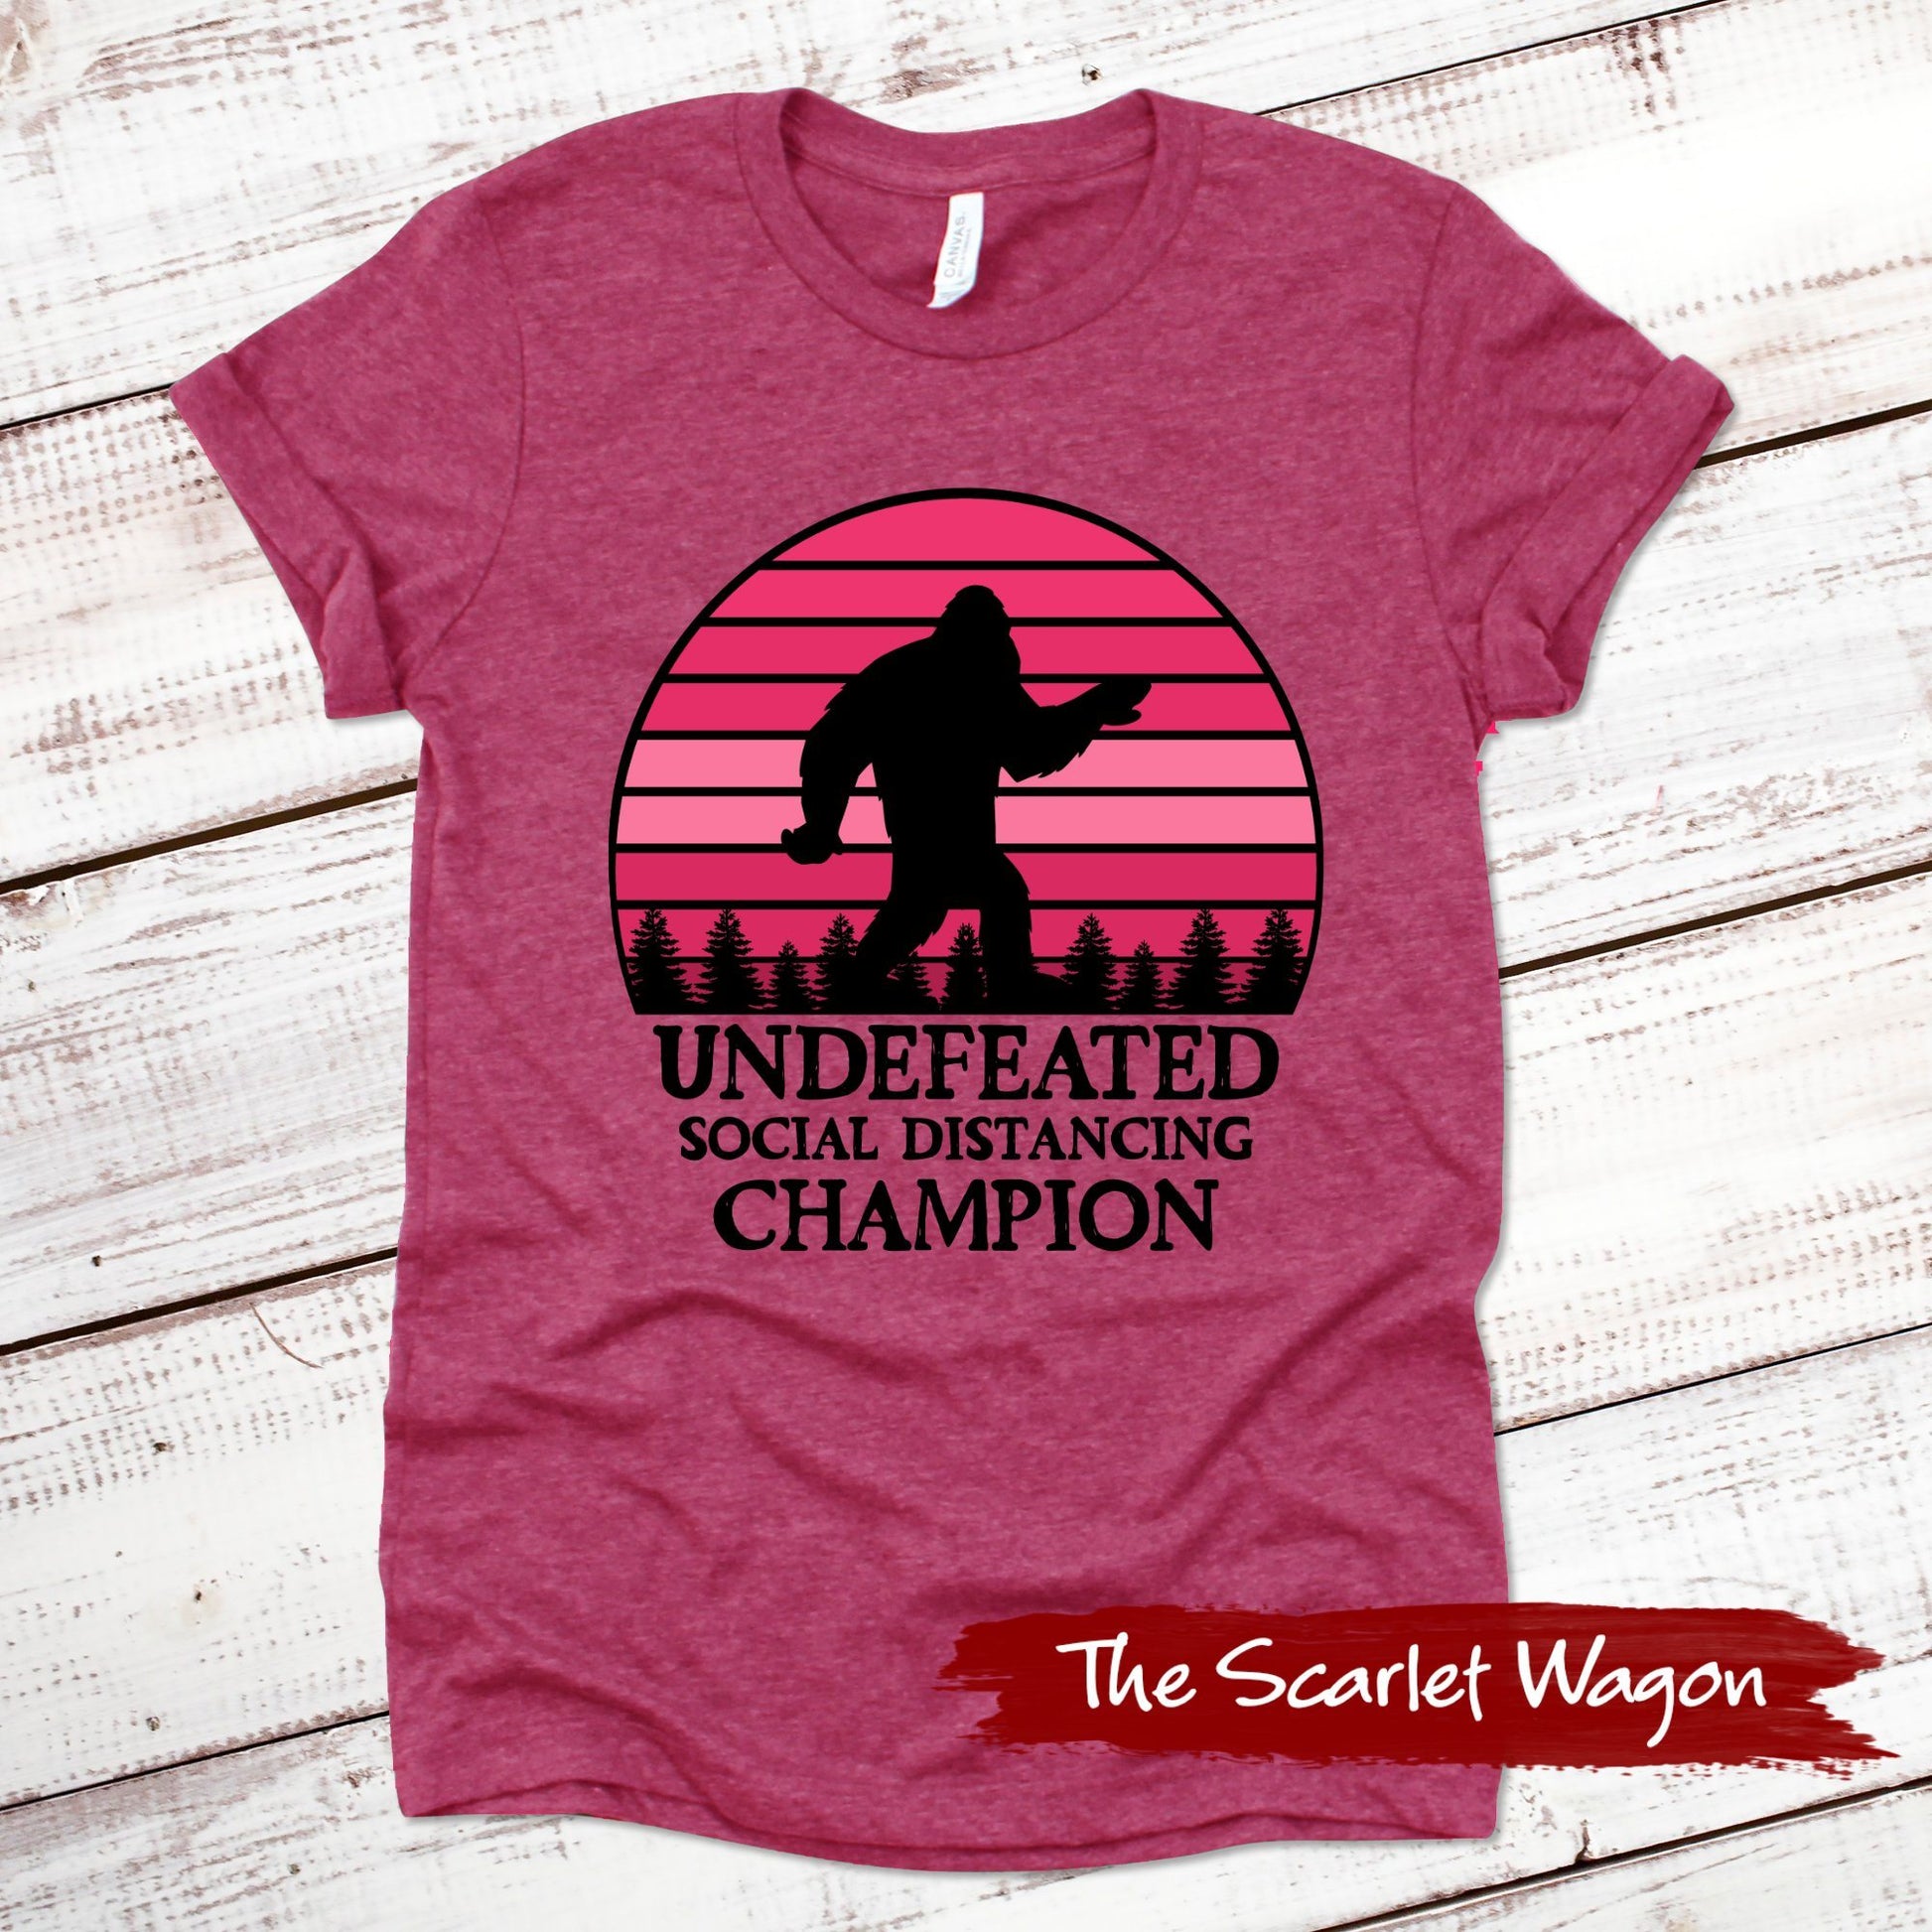 Bigfoot Social Distancing Champion Funny Shirt Scarlet Wagon Heather Raspberry XS 